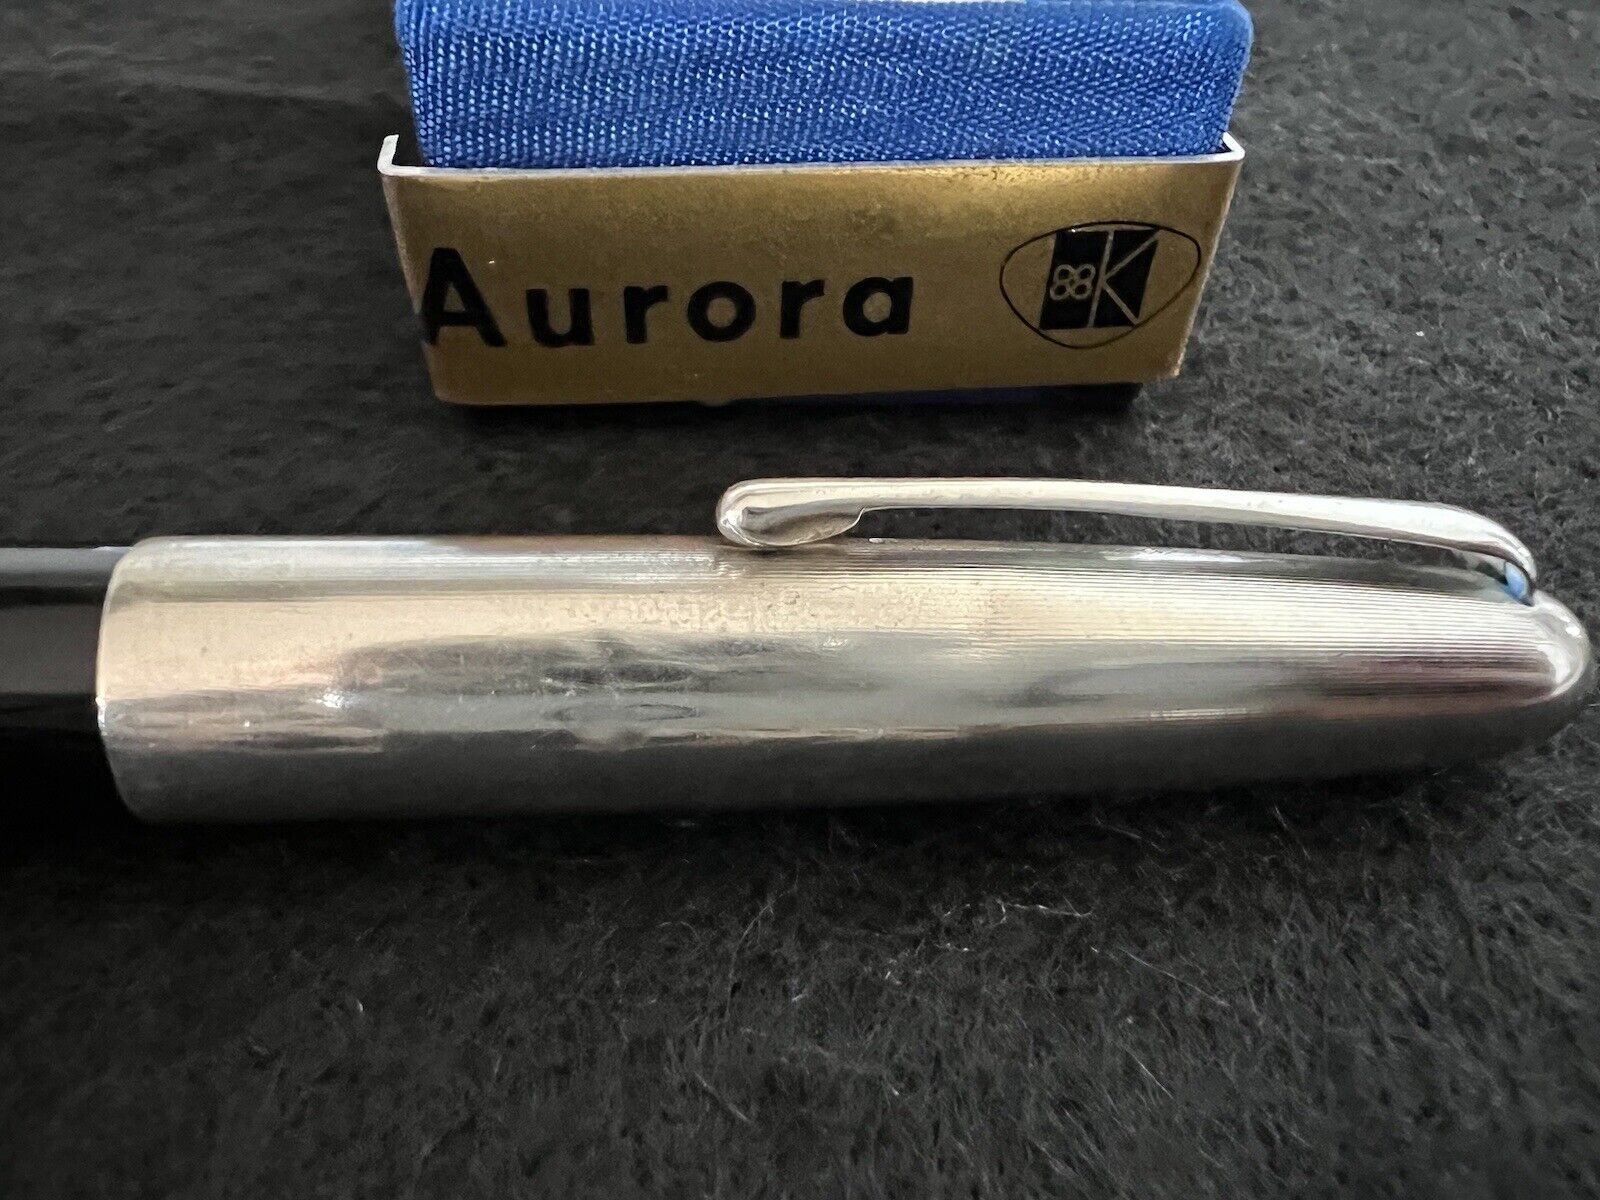 Aurora 88K Pen Fountain Pen Gold Plunger Hooded Nikargenta Marking